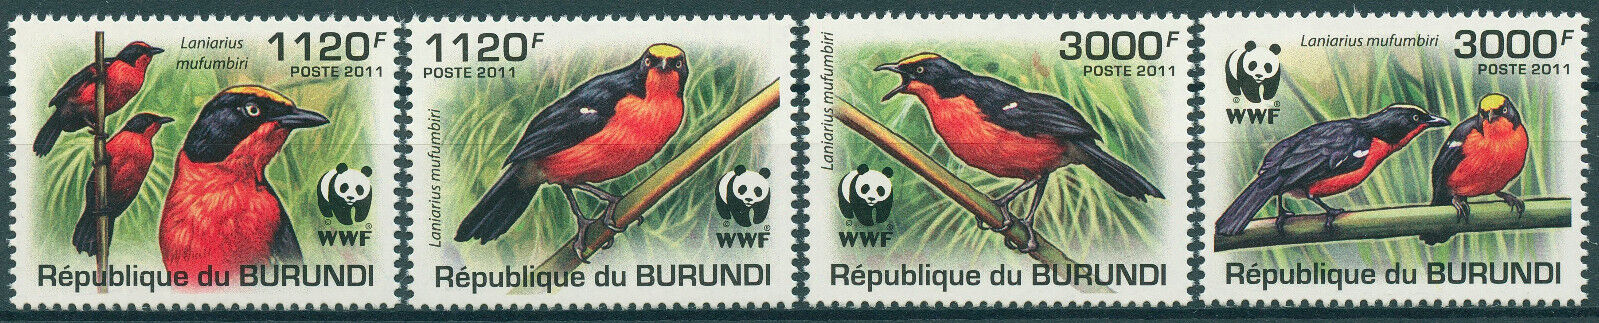 Burundi 2011 MNH Birds on Stamps WWF Papyrus Gonolek 4v Set